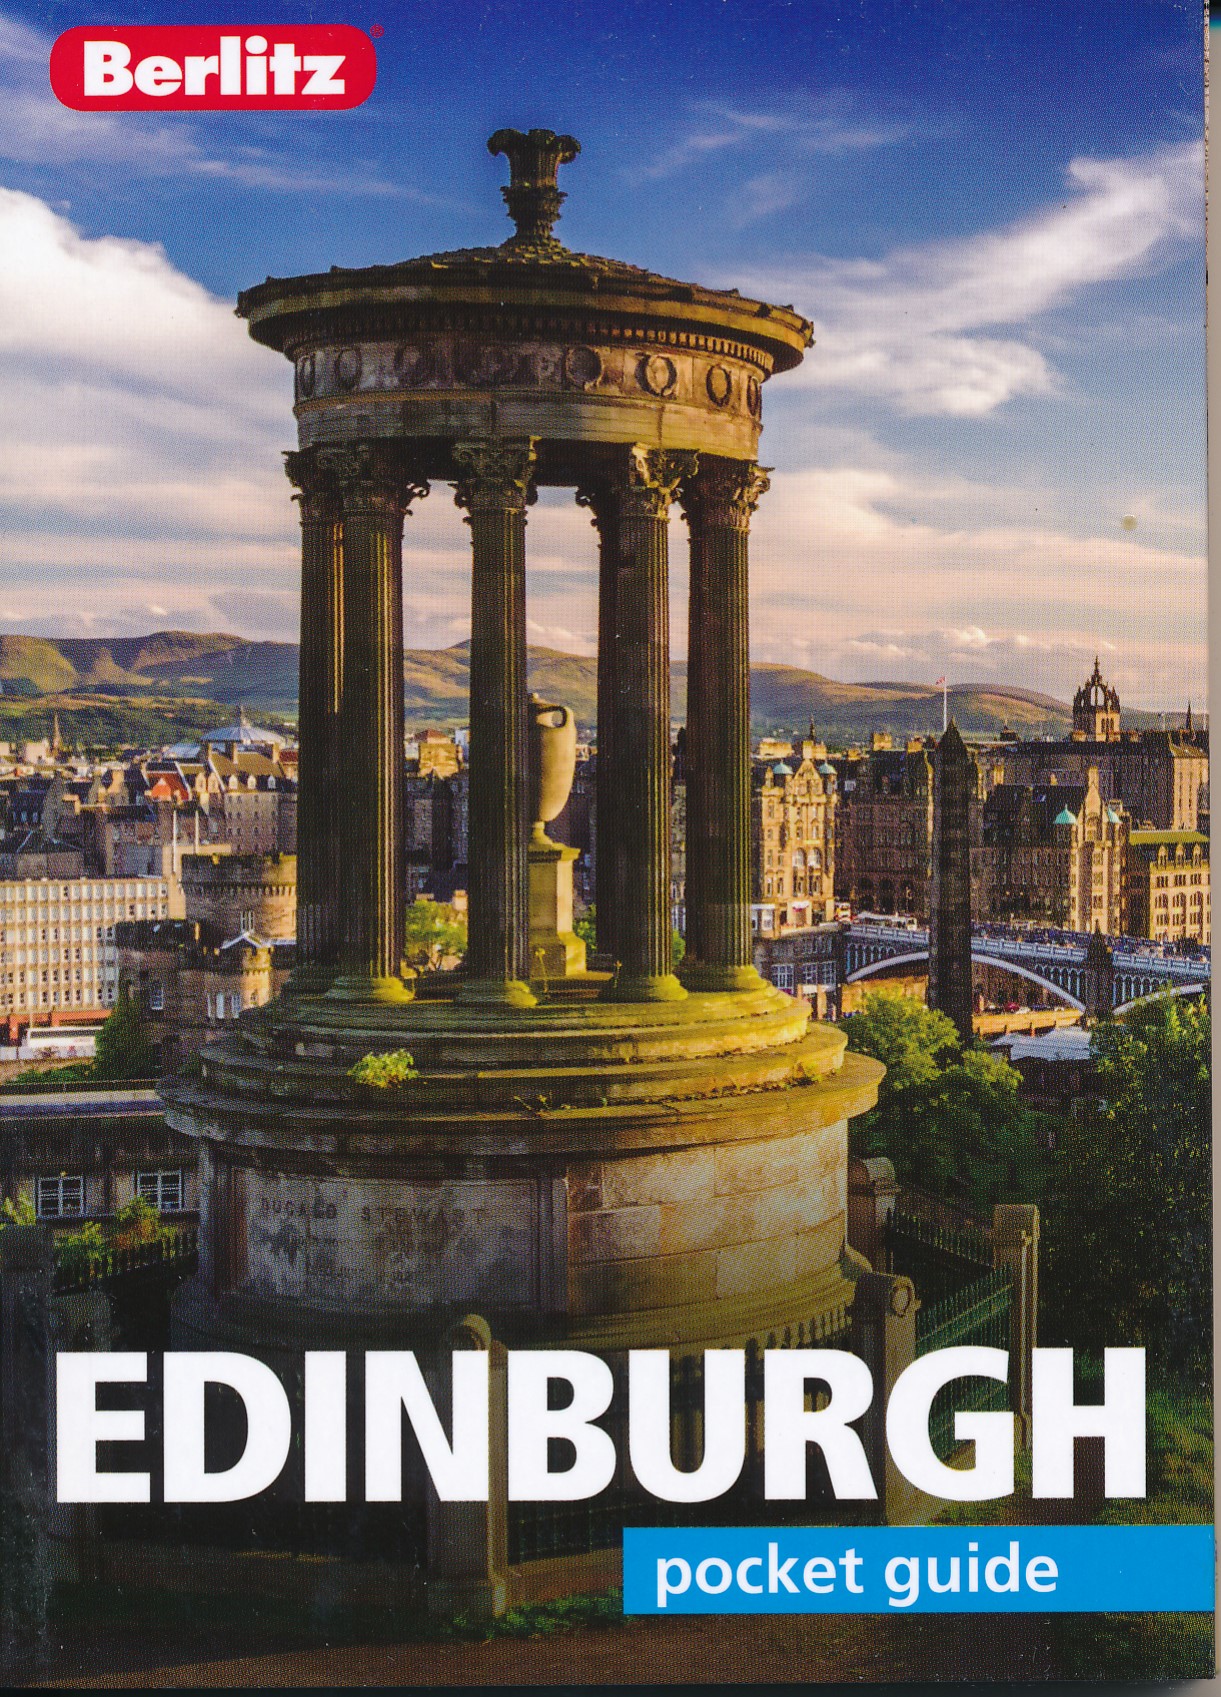 Online bestellen: Reisgids Pocket Guide Edinburgh | Berlitz